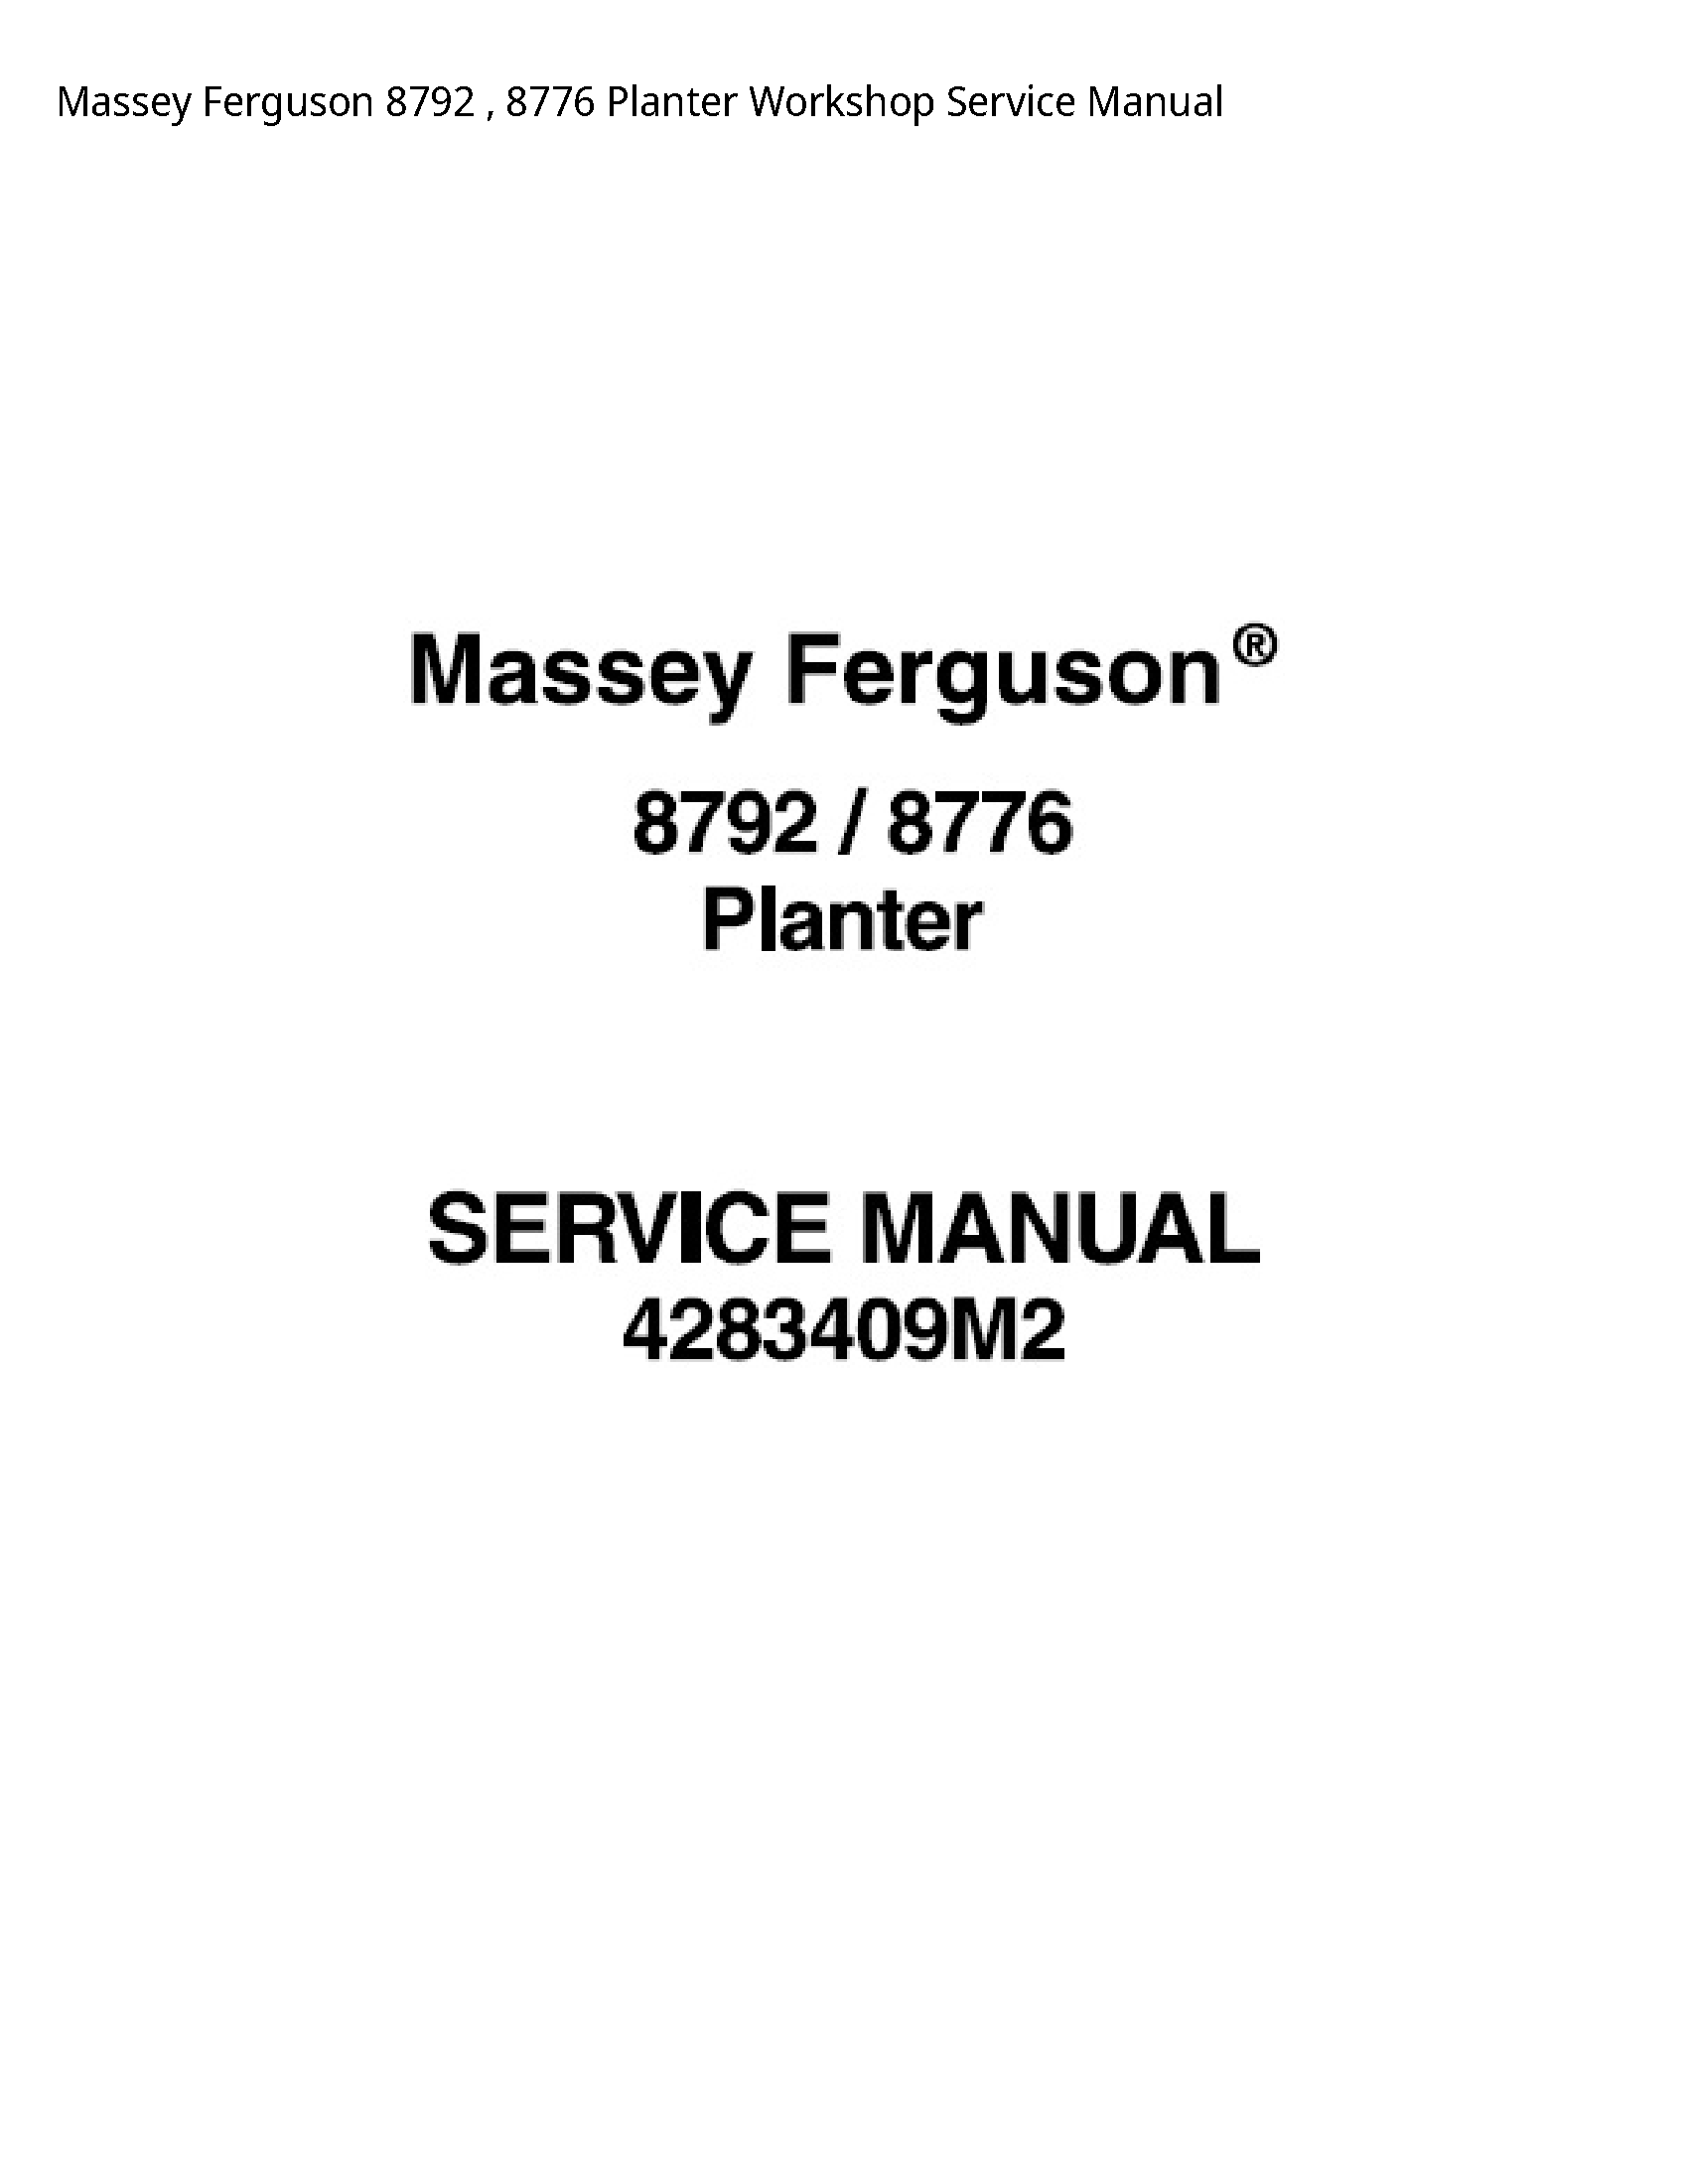 Massey Ferguson 8792 Planter Service manual